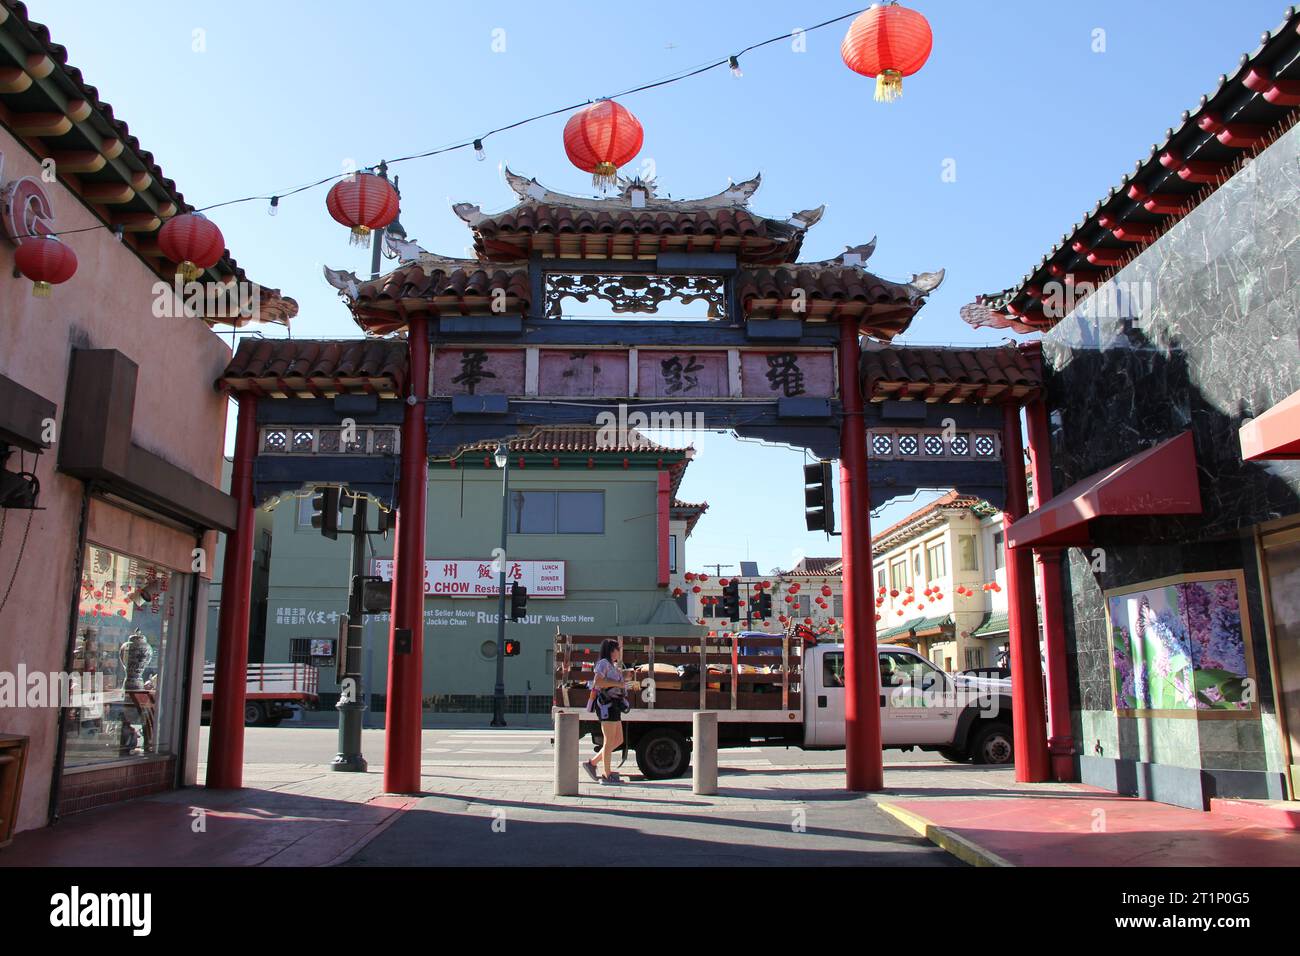 Chinatown Plaza Los Angeles CA Ornate Architectural Entrance Stock Photo